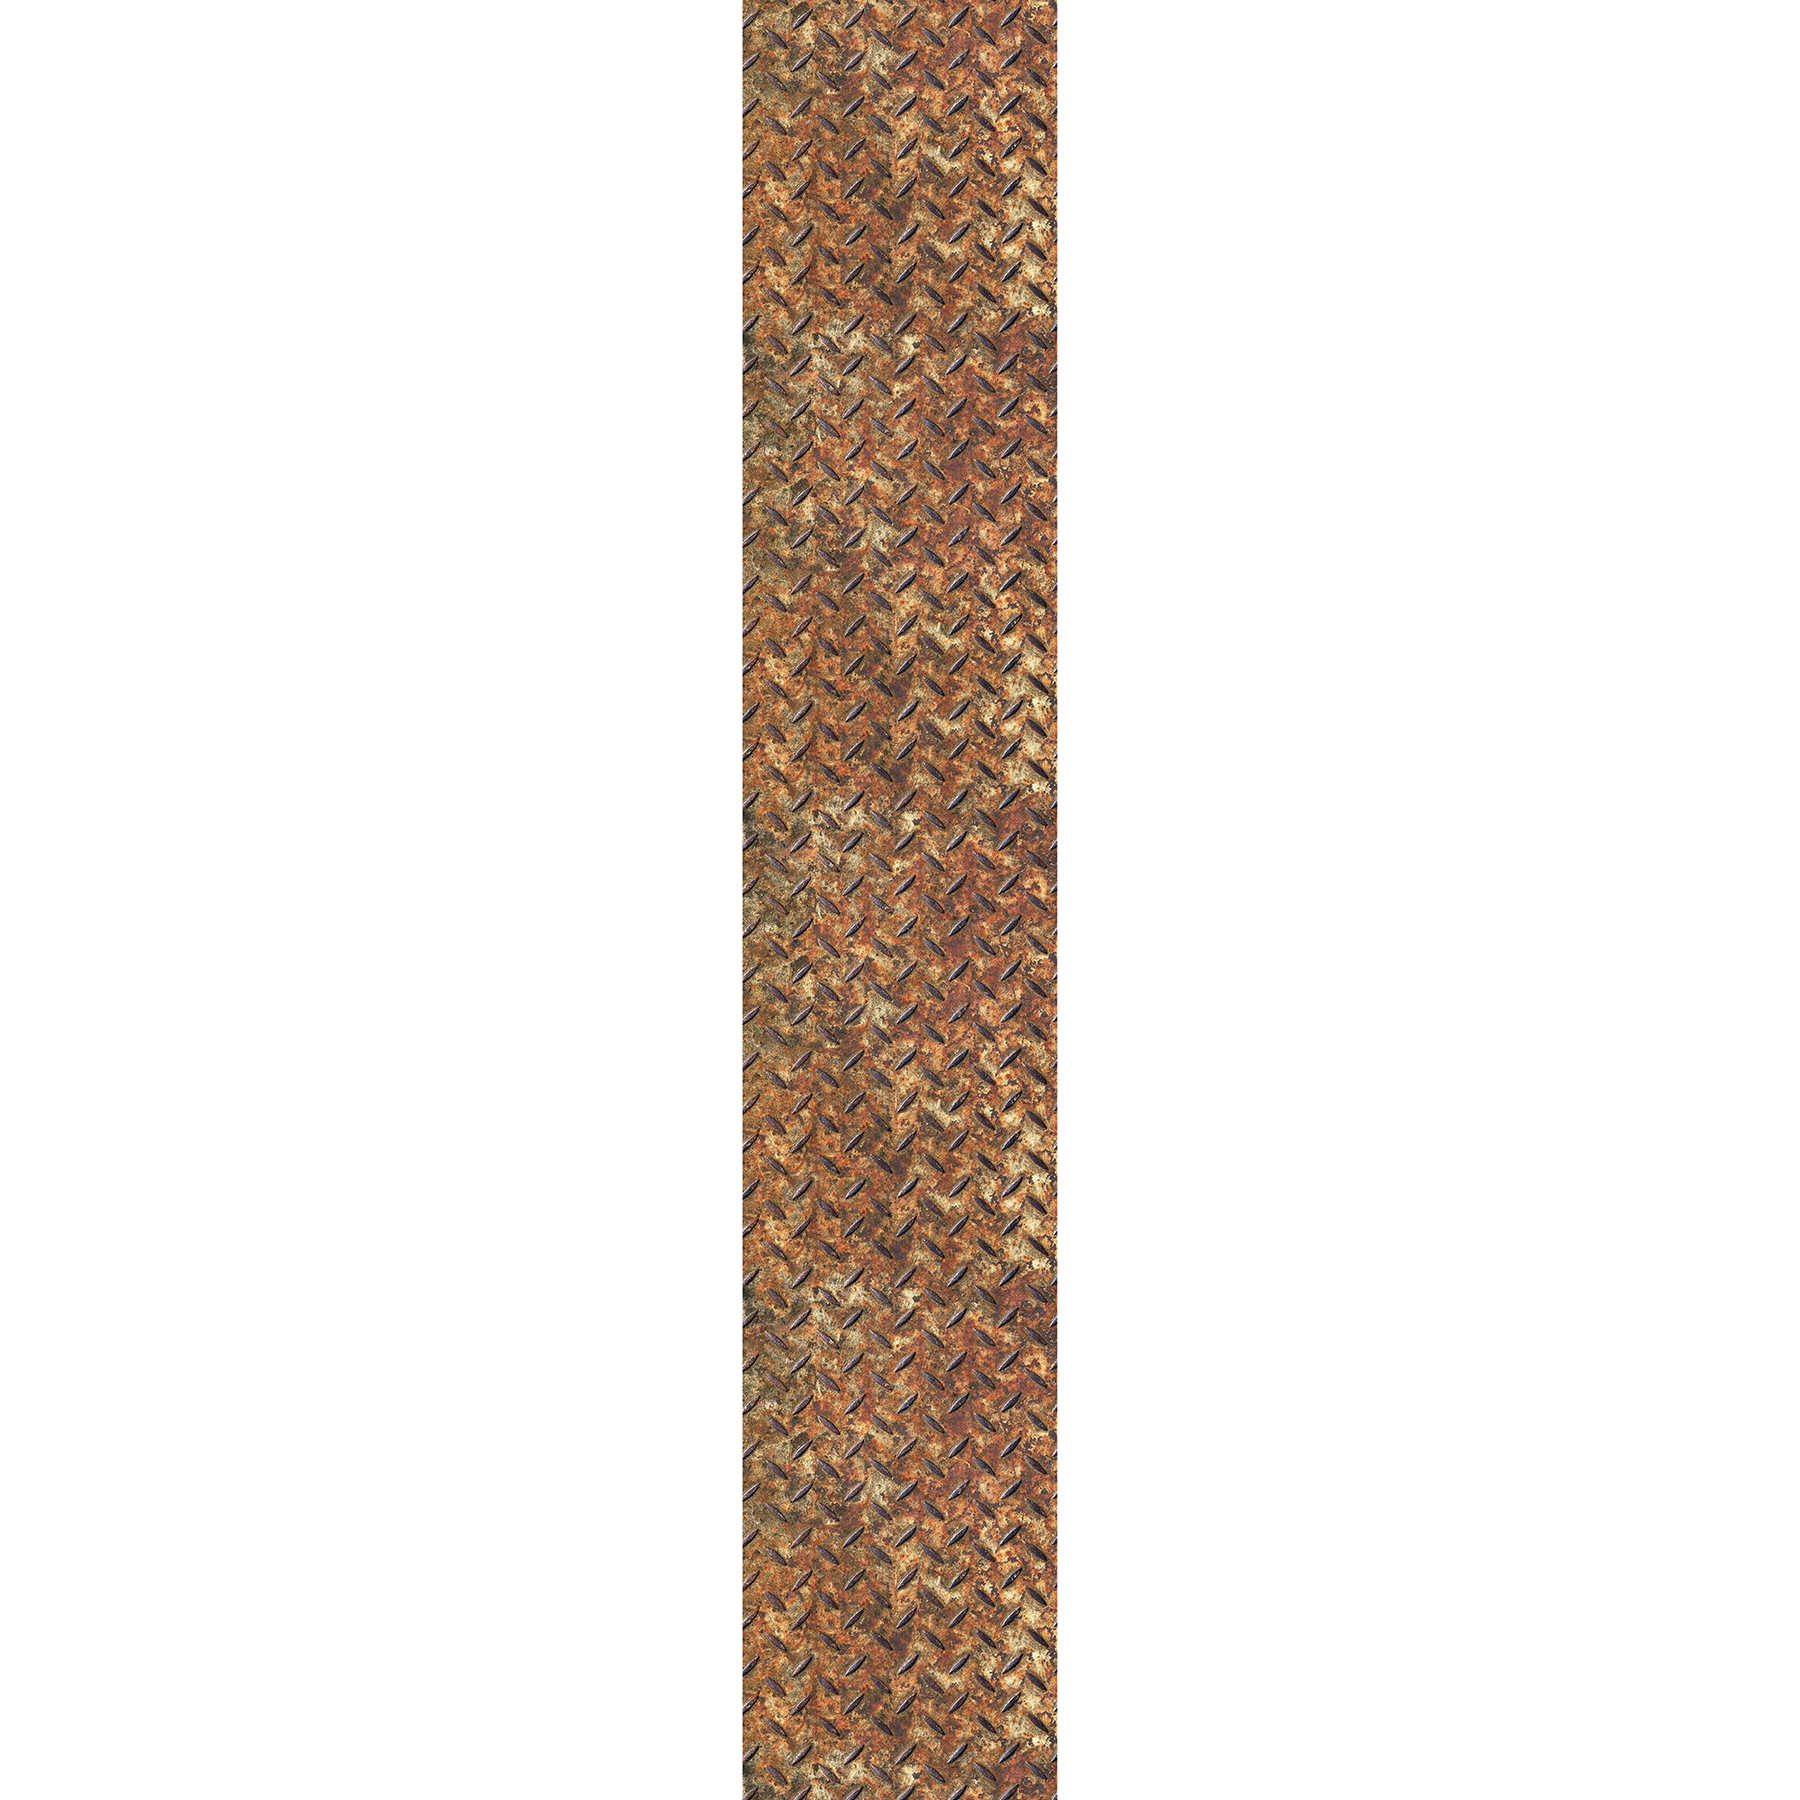         Motif wallpaper industrial steel plate with diamond pattern - brown
    